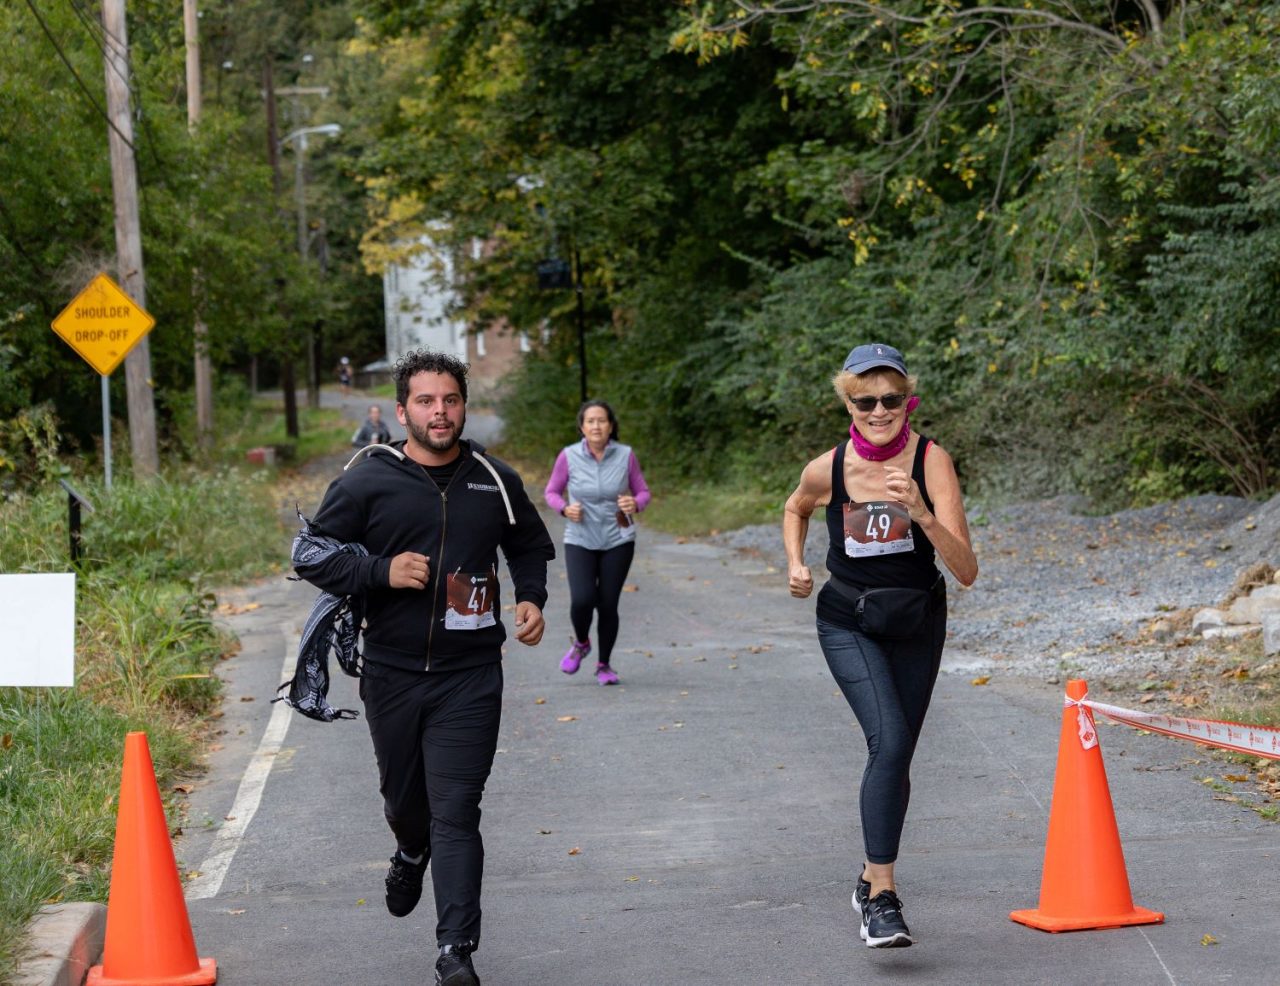 A man and a woman run during the Sixth Annual Artful Dash 5K Run/Walk on the Karl Stirner Arts Trail in Easton, Pennsylvania.